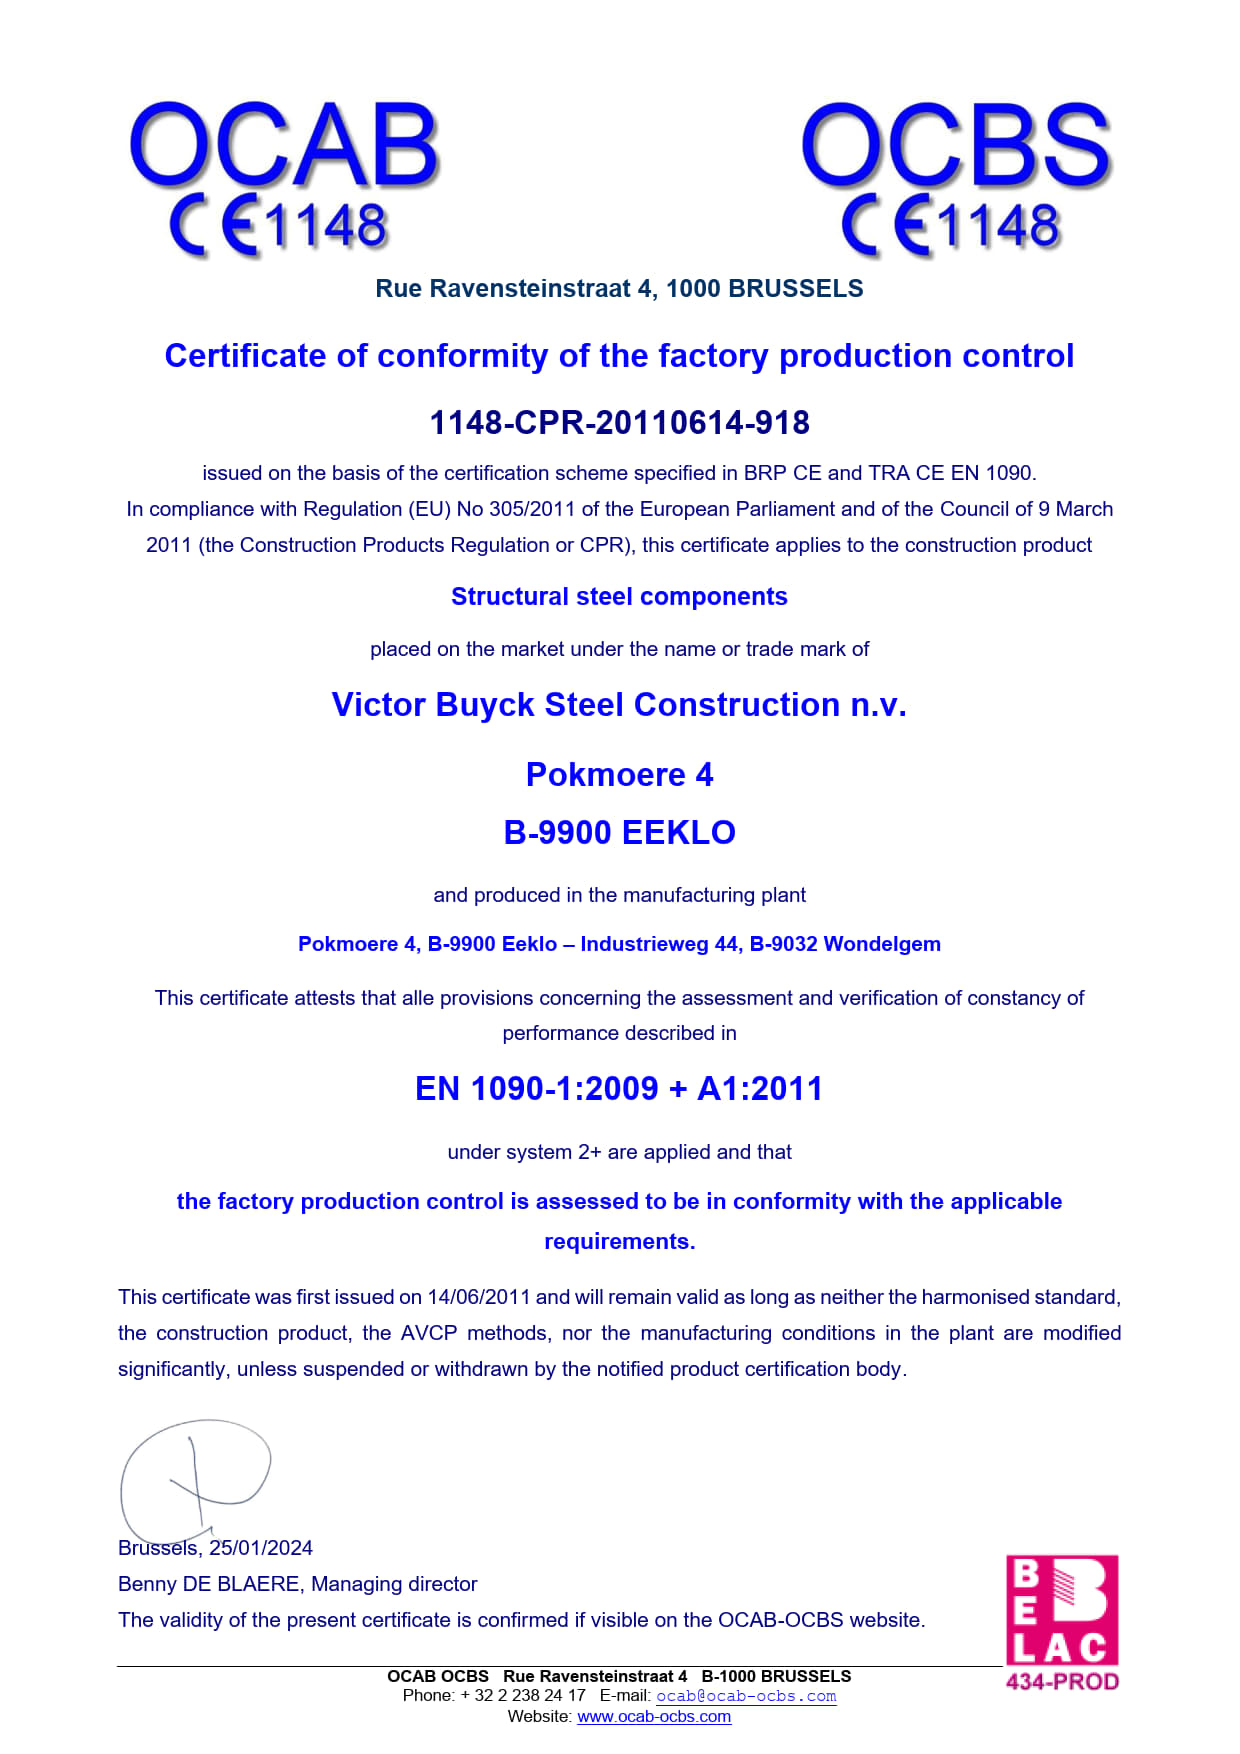 OCBS_Certificate EN1090-1_2024.01.25_EN_1.jpg